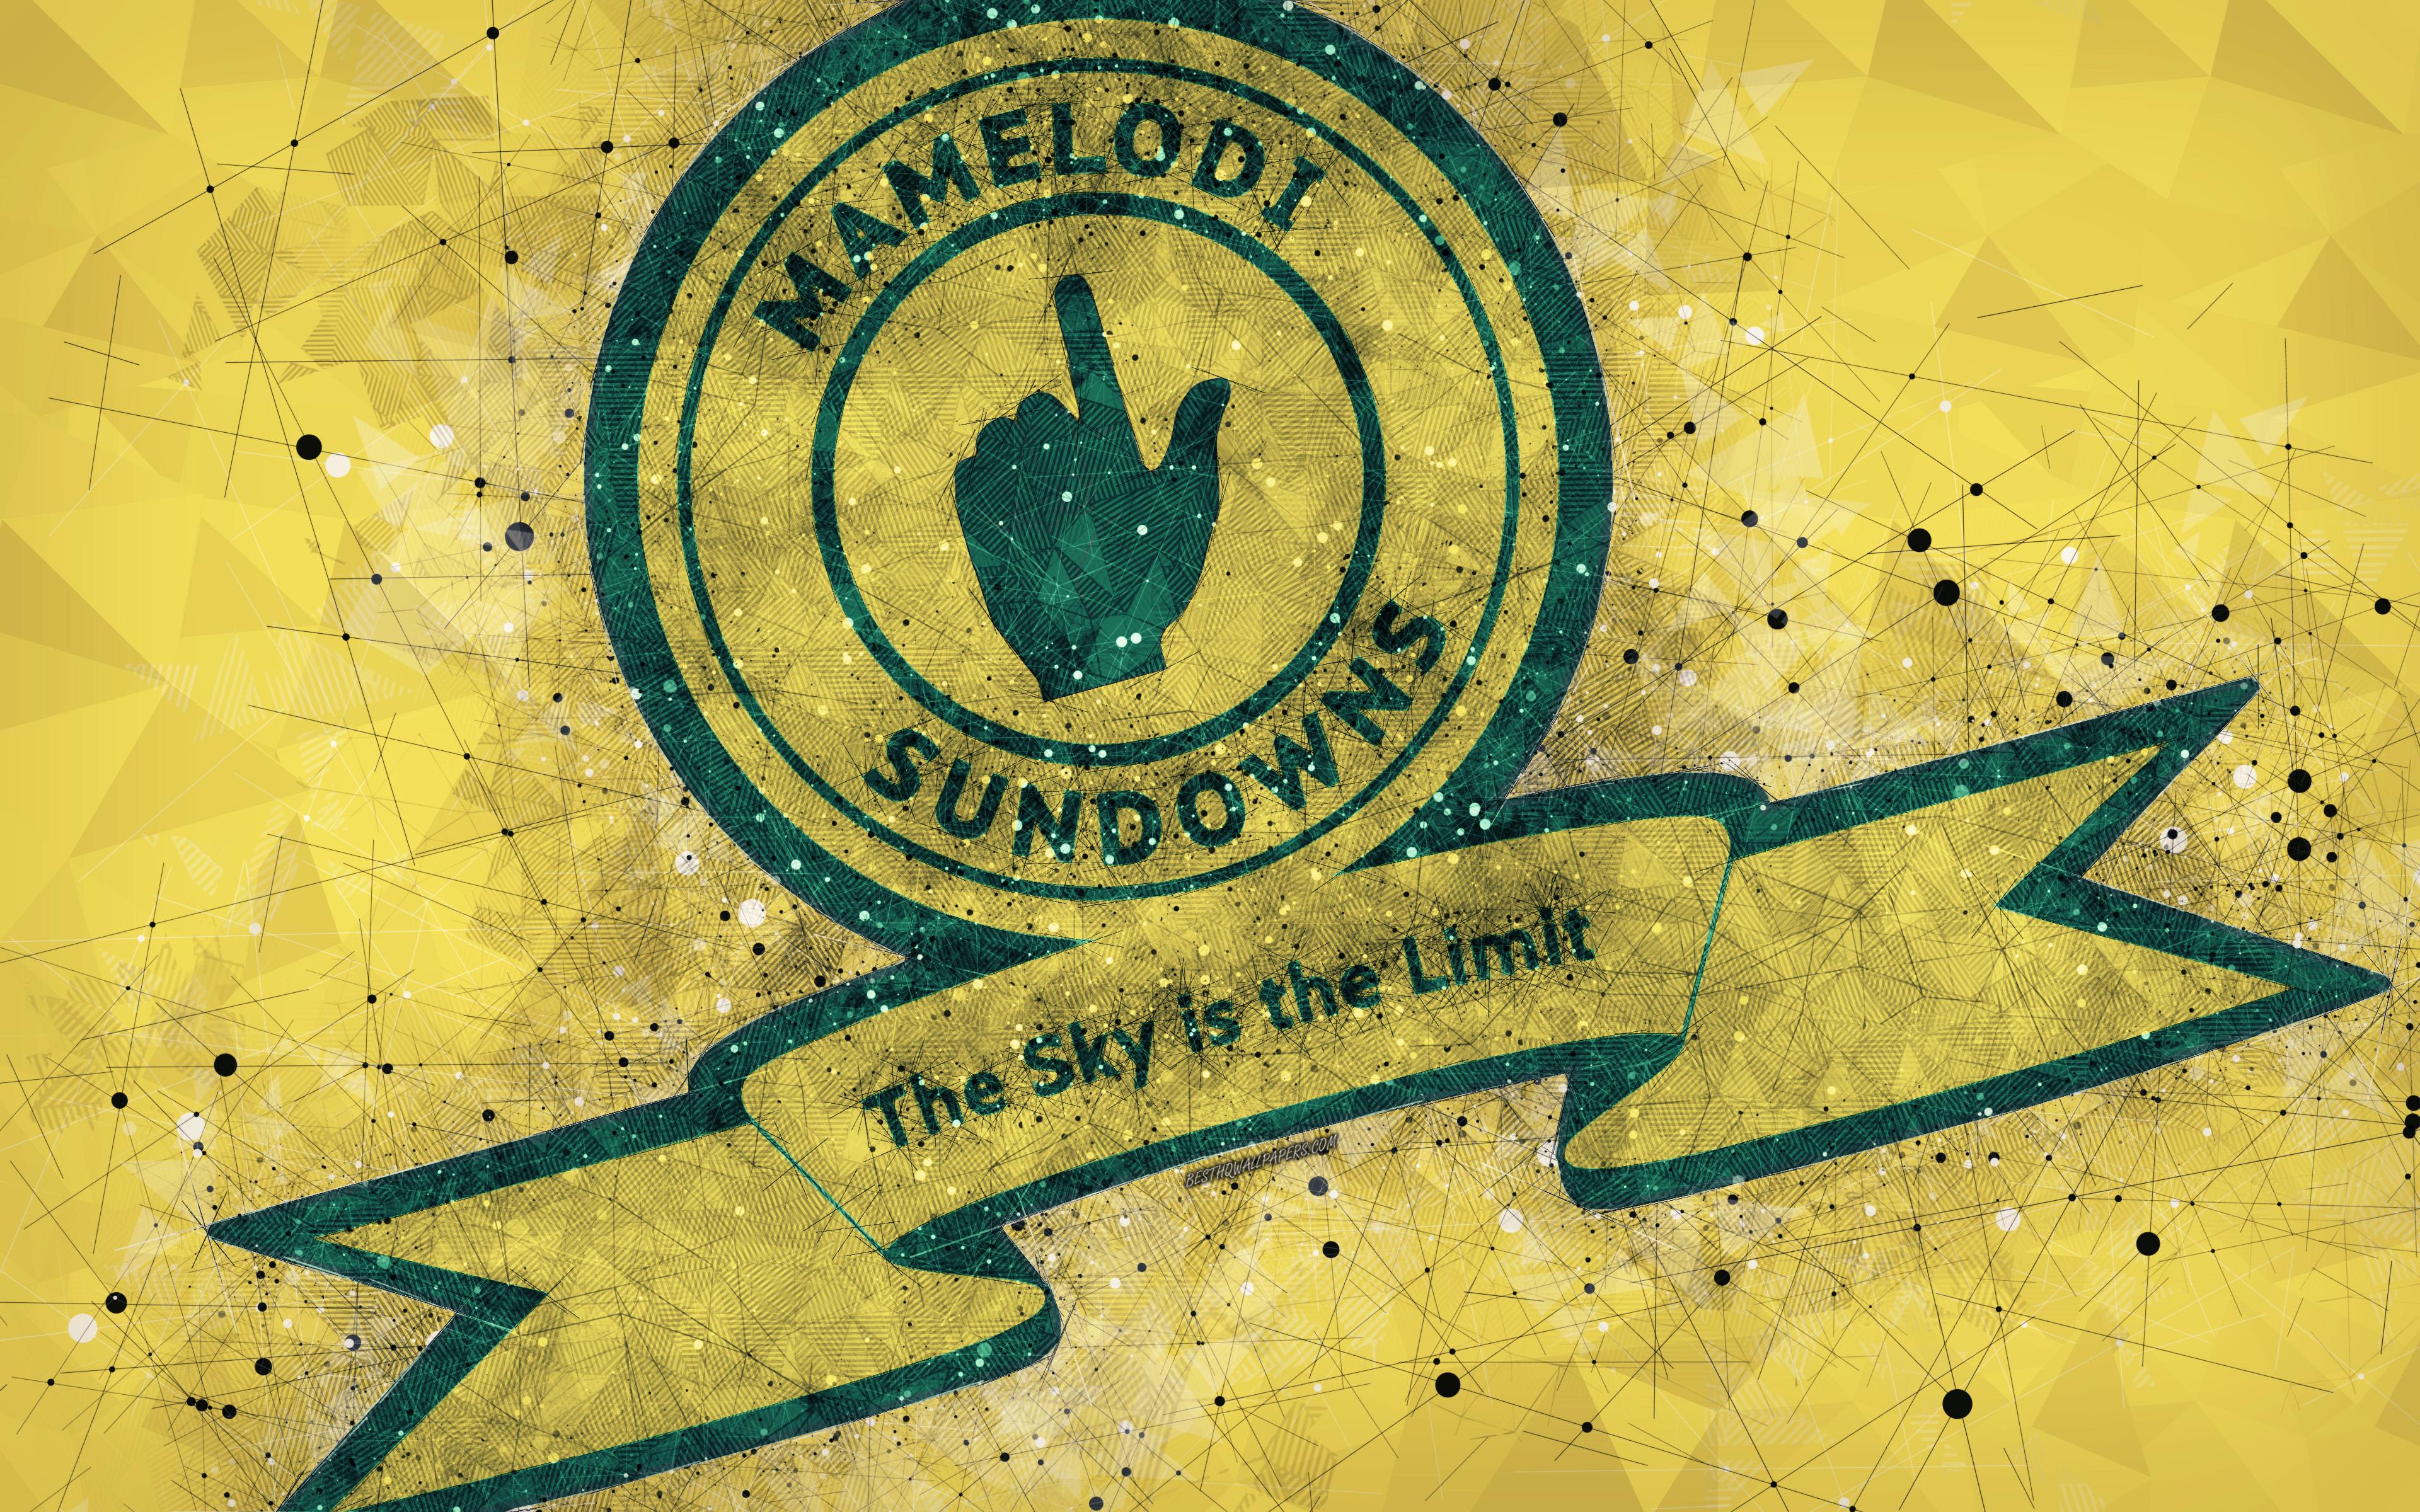 Download wallpaper Mamelodi Sundowns FC, 4k, logo, geometric art